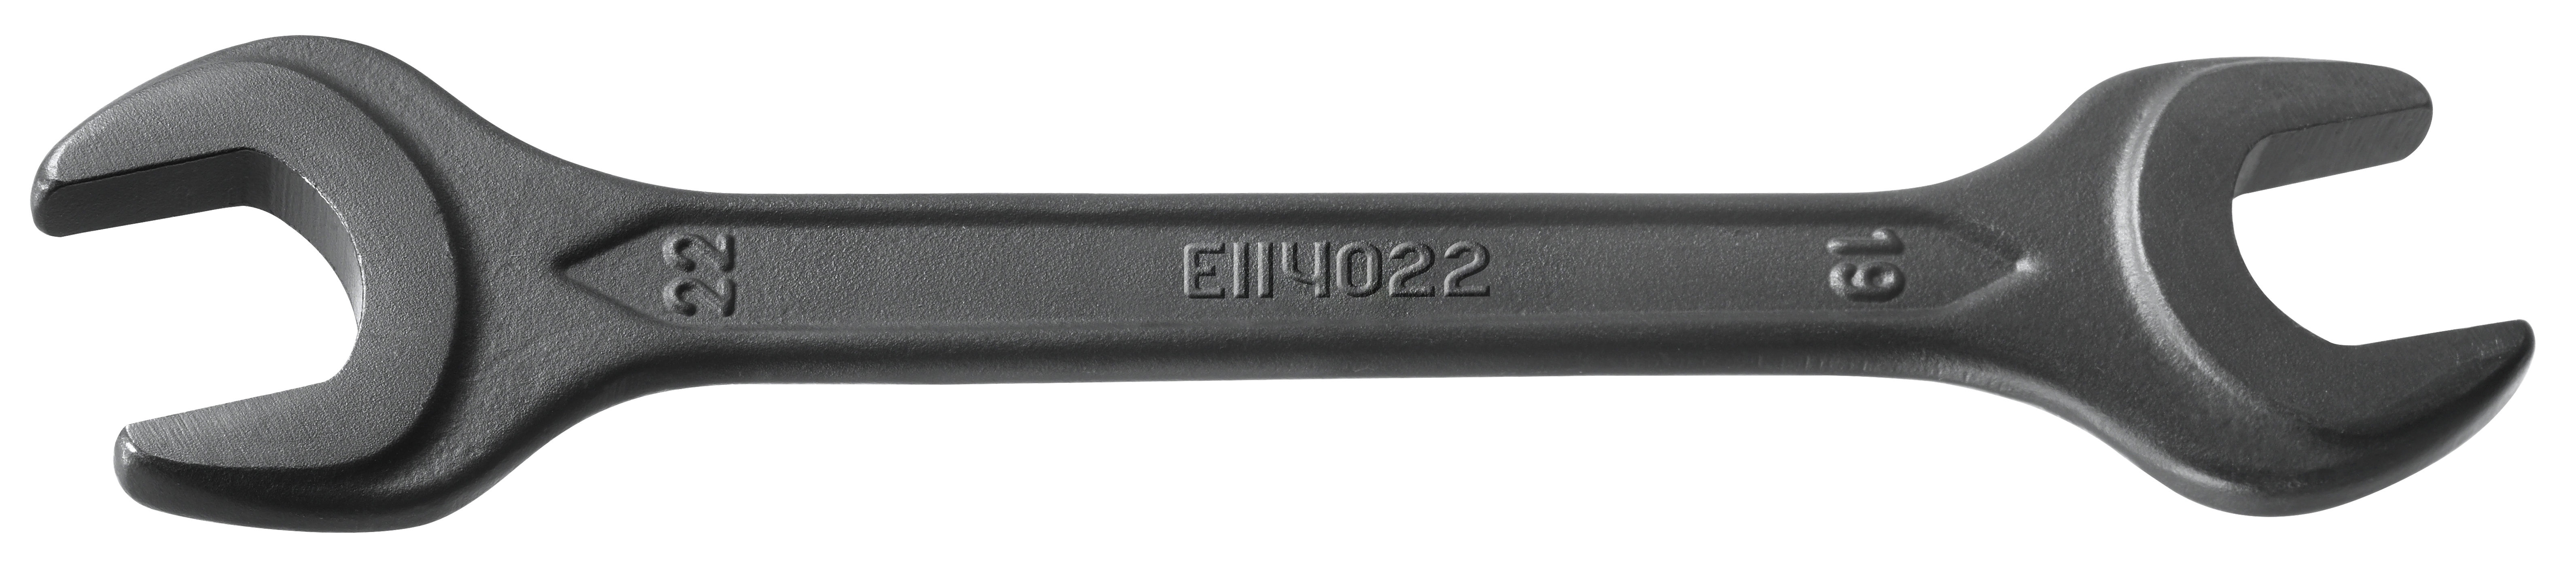 1.E114001 Impact steeksleutel din 5.5x7 mm